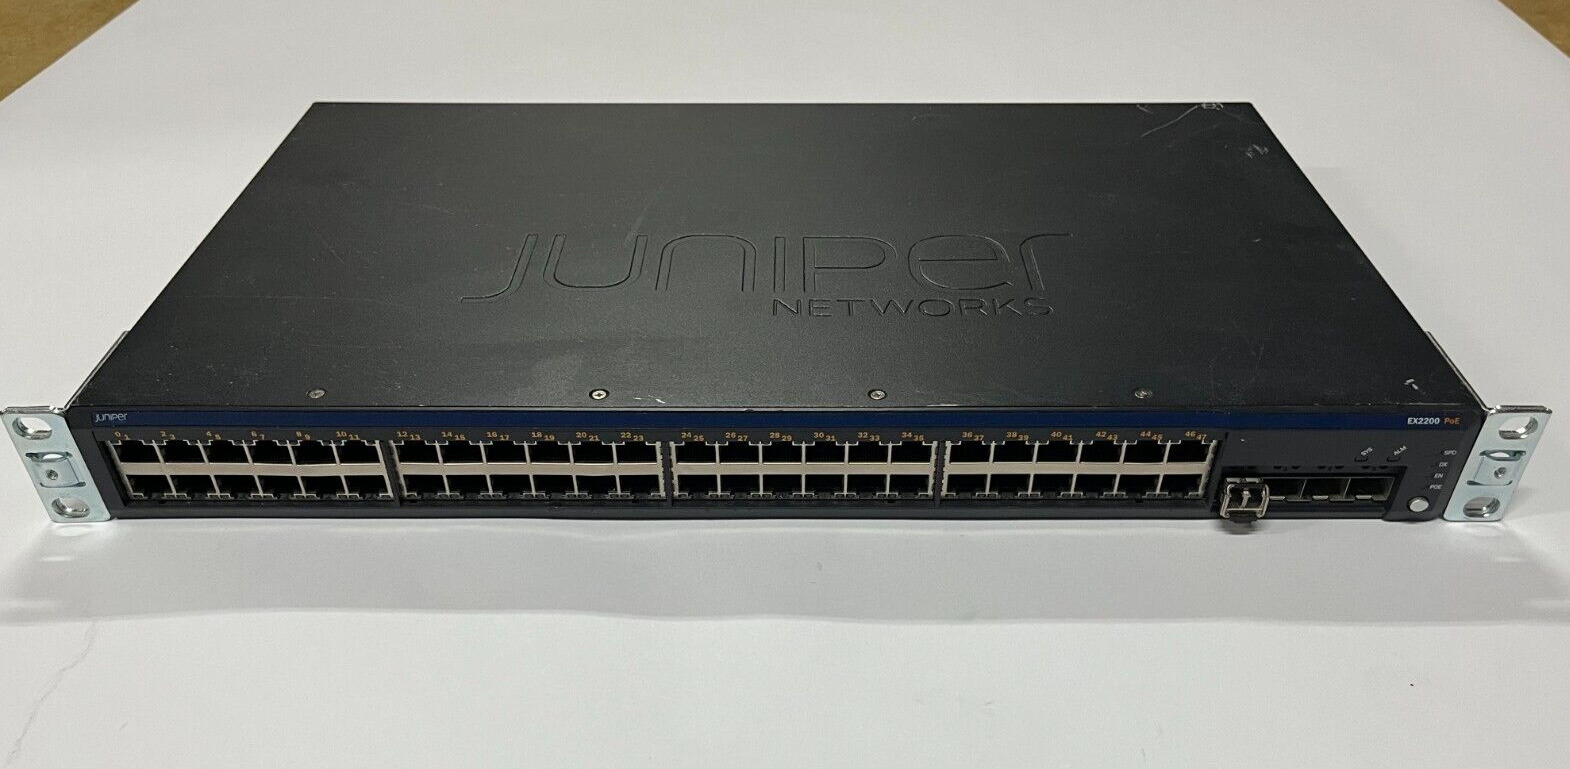 Juniper Networks EX2200-48P-4G 48 Port PoE Gigabit Switch with SFP Module